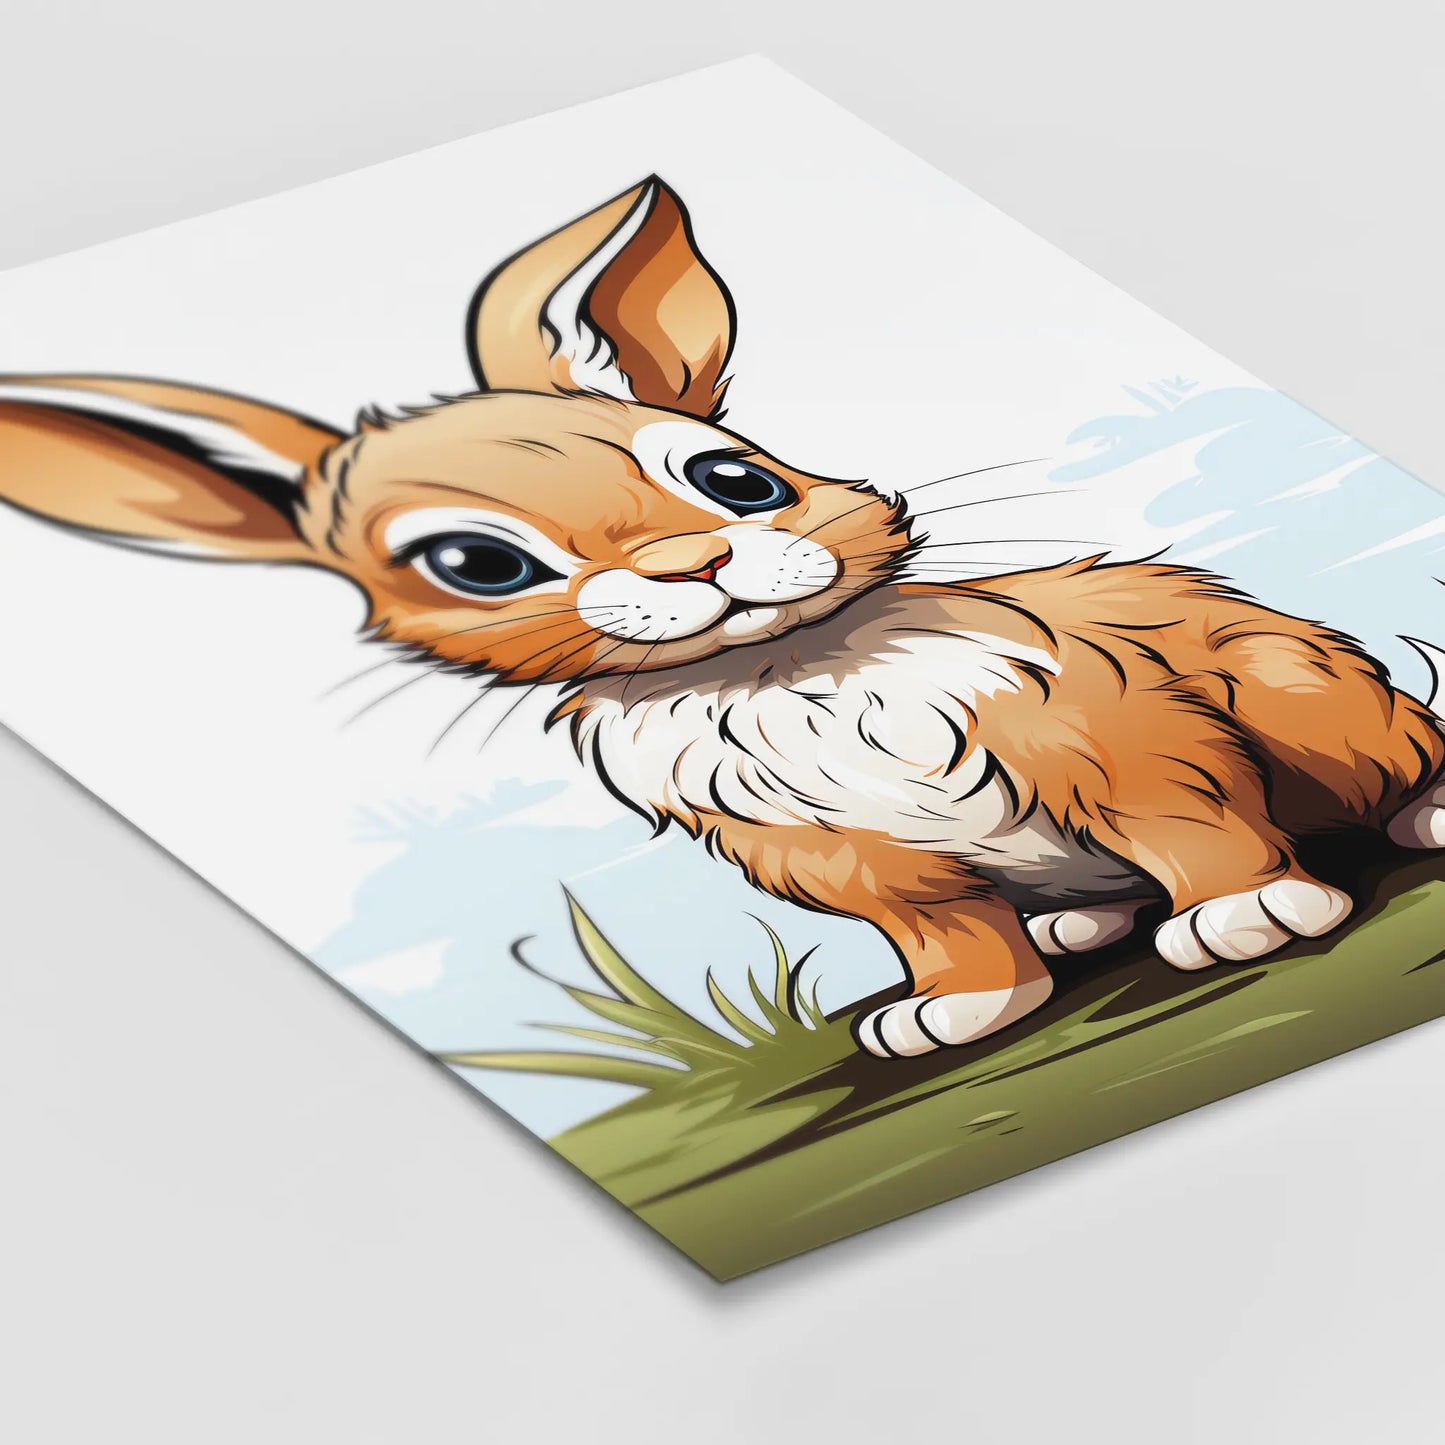 Rabbit No 4 - Comic Style - Poster